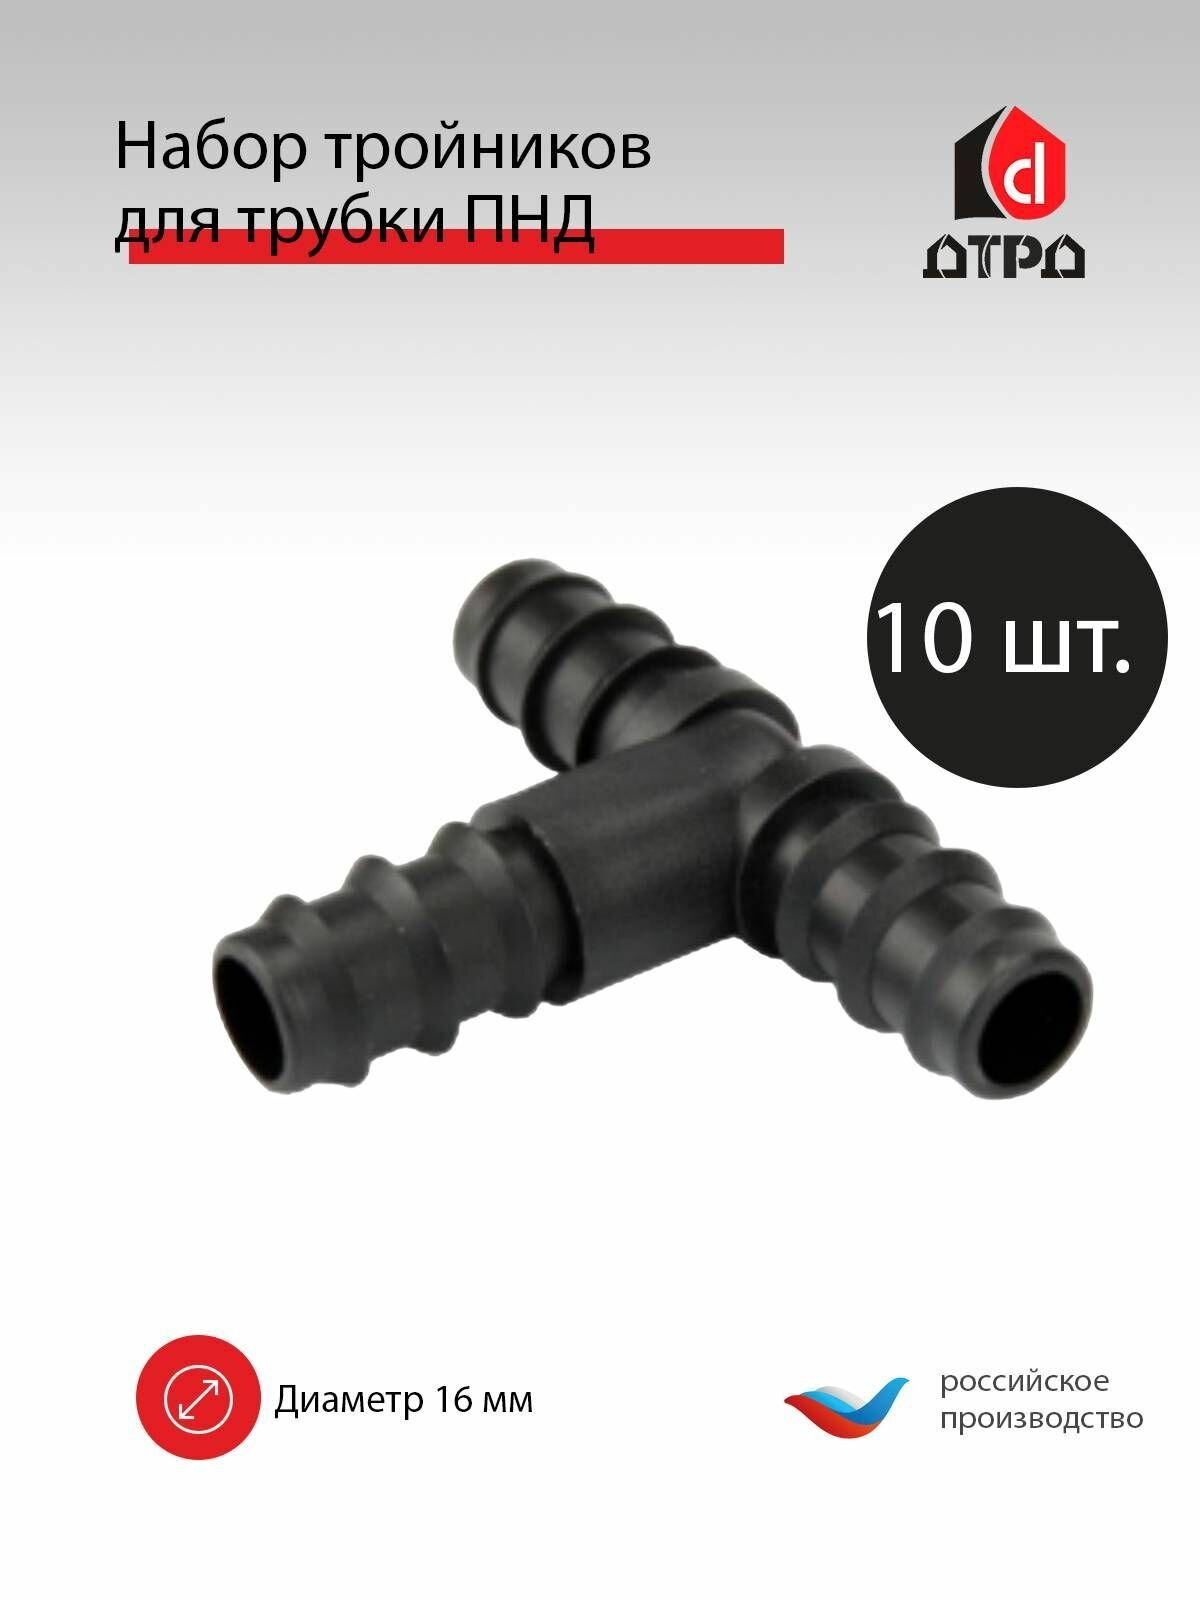 Тройник 16х16х16 мм для трубки ПНД 16 мм TUBOFLEX - 10 шт. Элемент комплекта капельного полива для формирования систем полива.